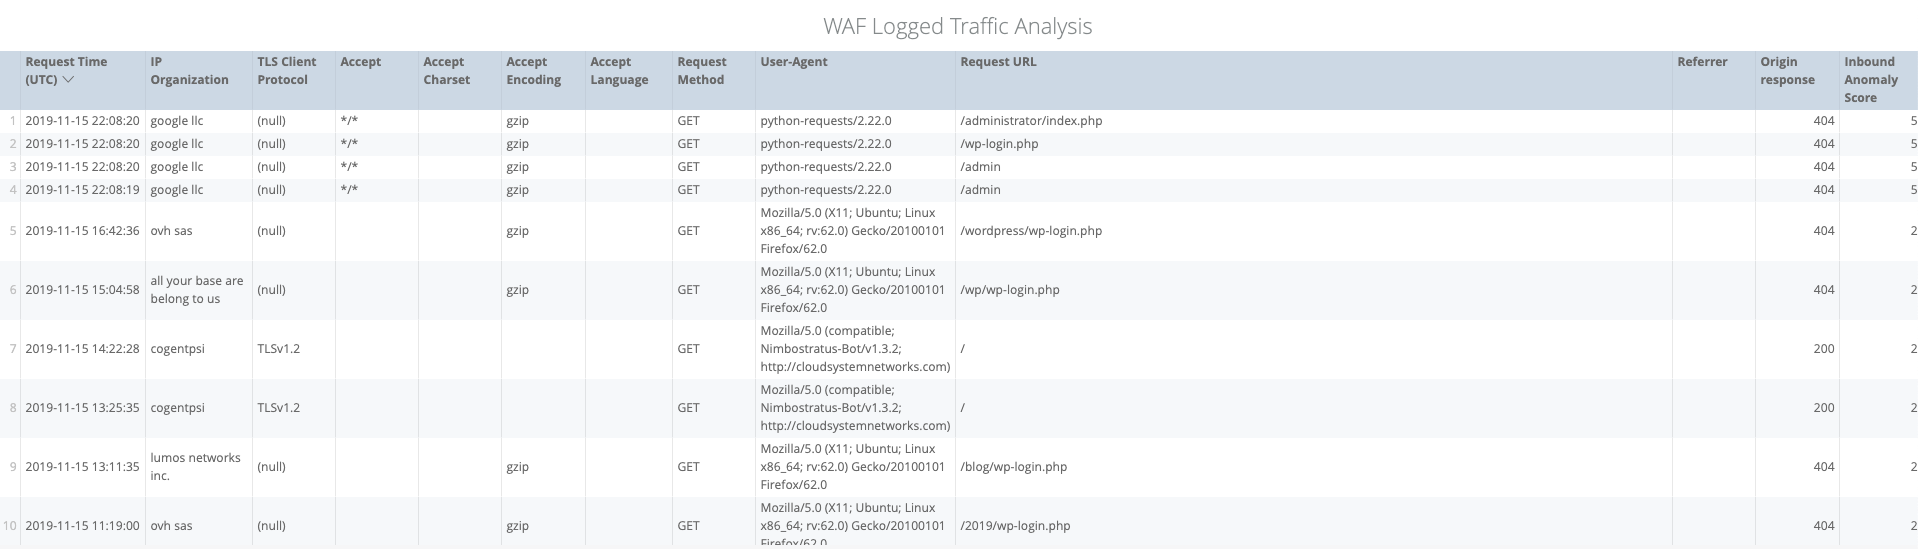 WAF Logged Traffic Analysis